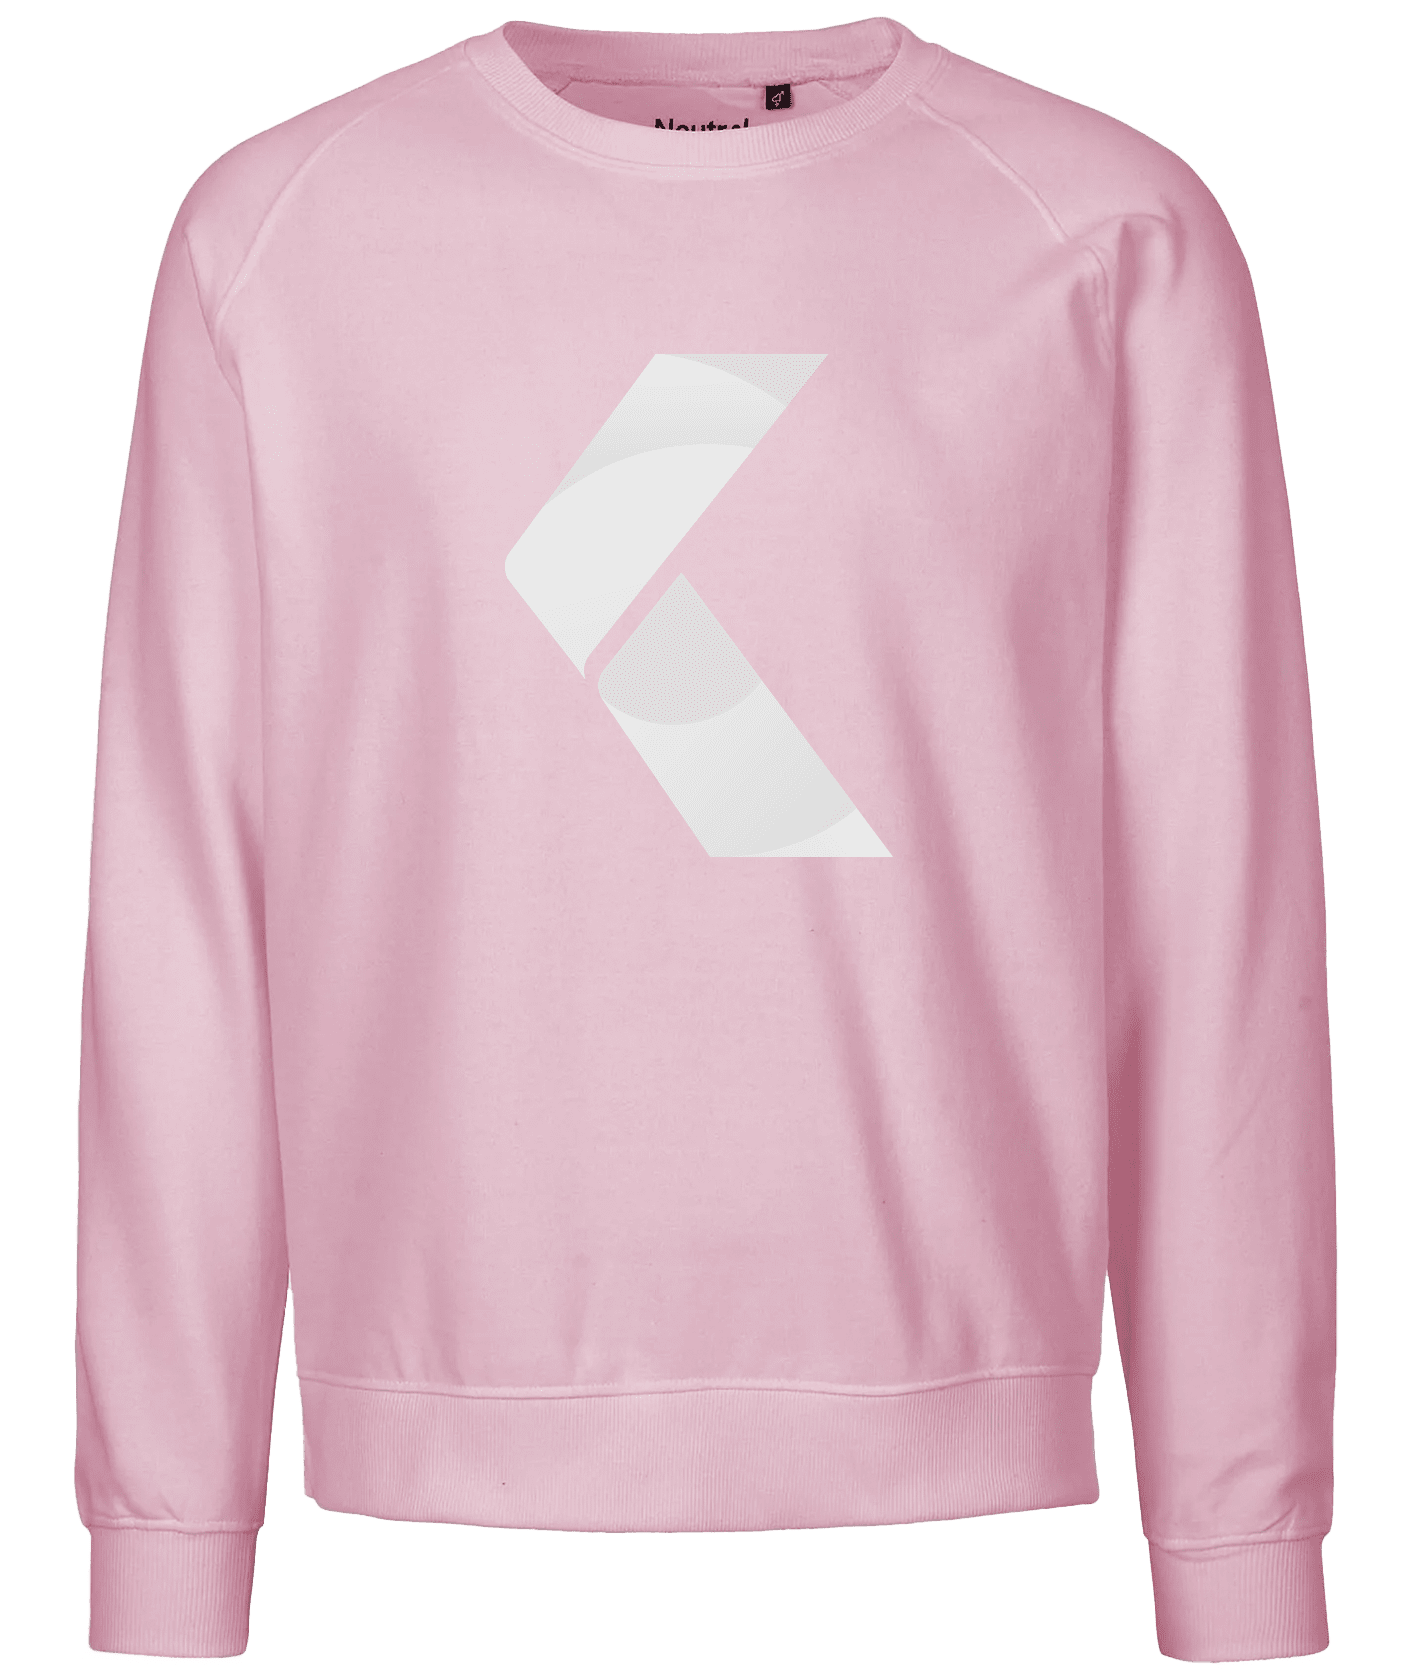 KinoCheck Fairtrade Sweater